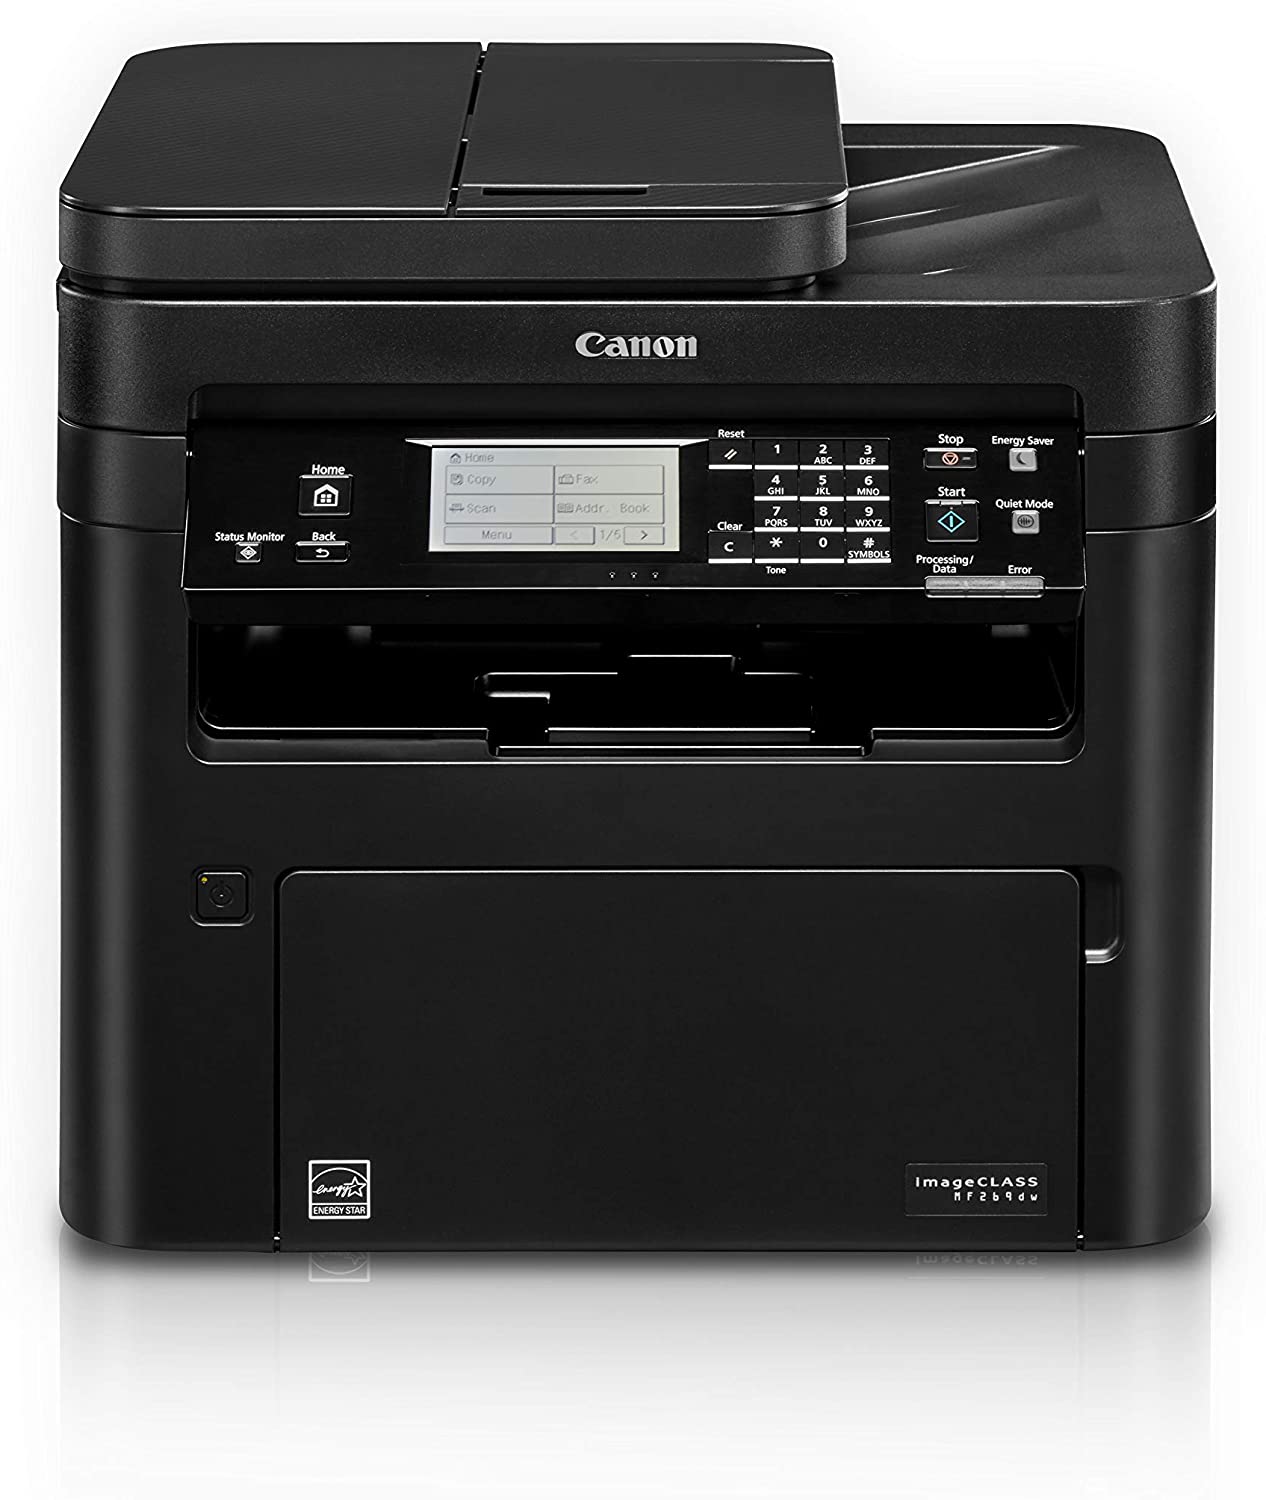 Canon MF269dw-B Monochrome Laser Printer with Scanner, Copier & Fax